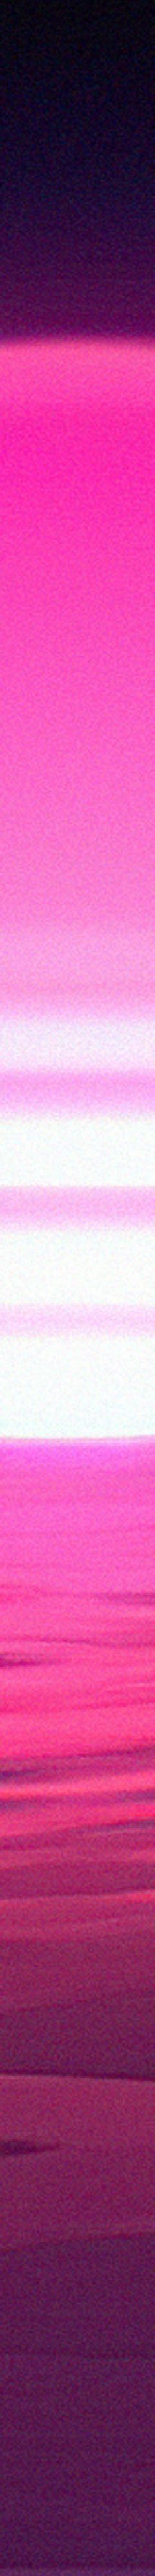 240x4000 Purple Sunrise 4k Vaporwave 240x4000 Resolution Wallpaper Hd